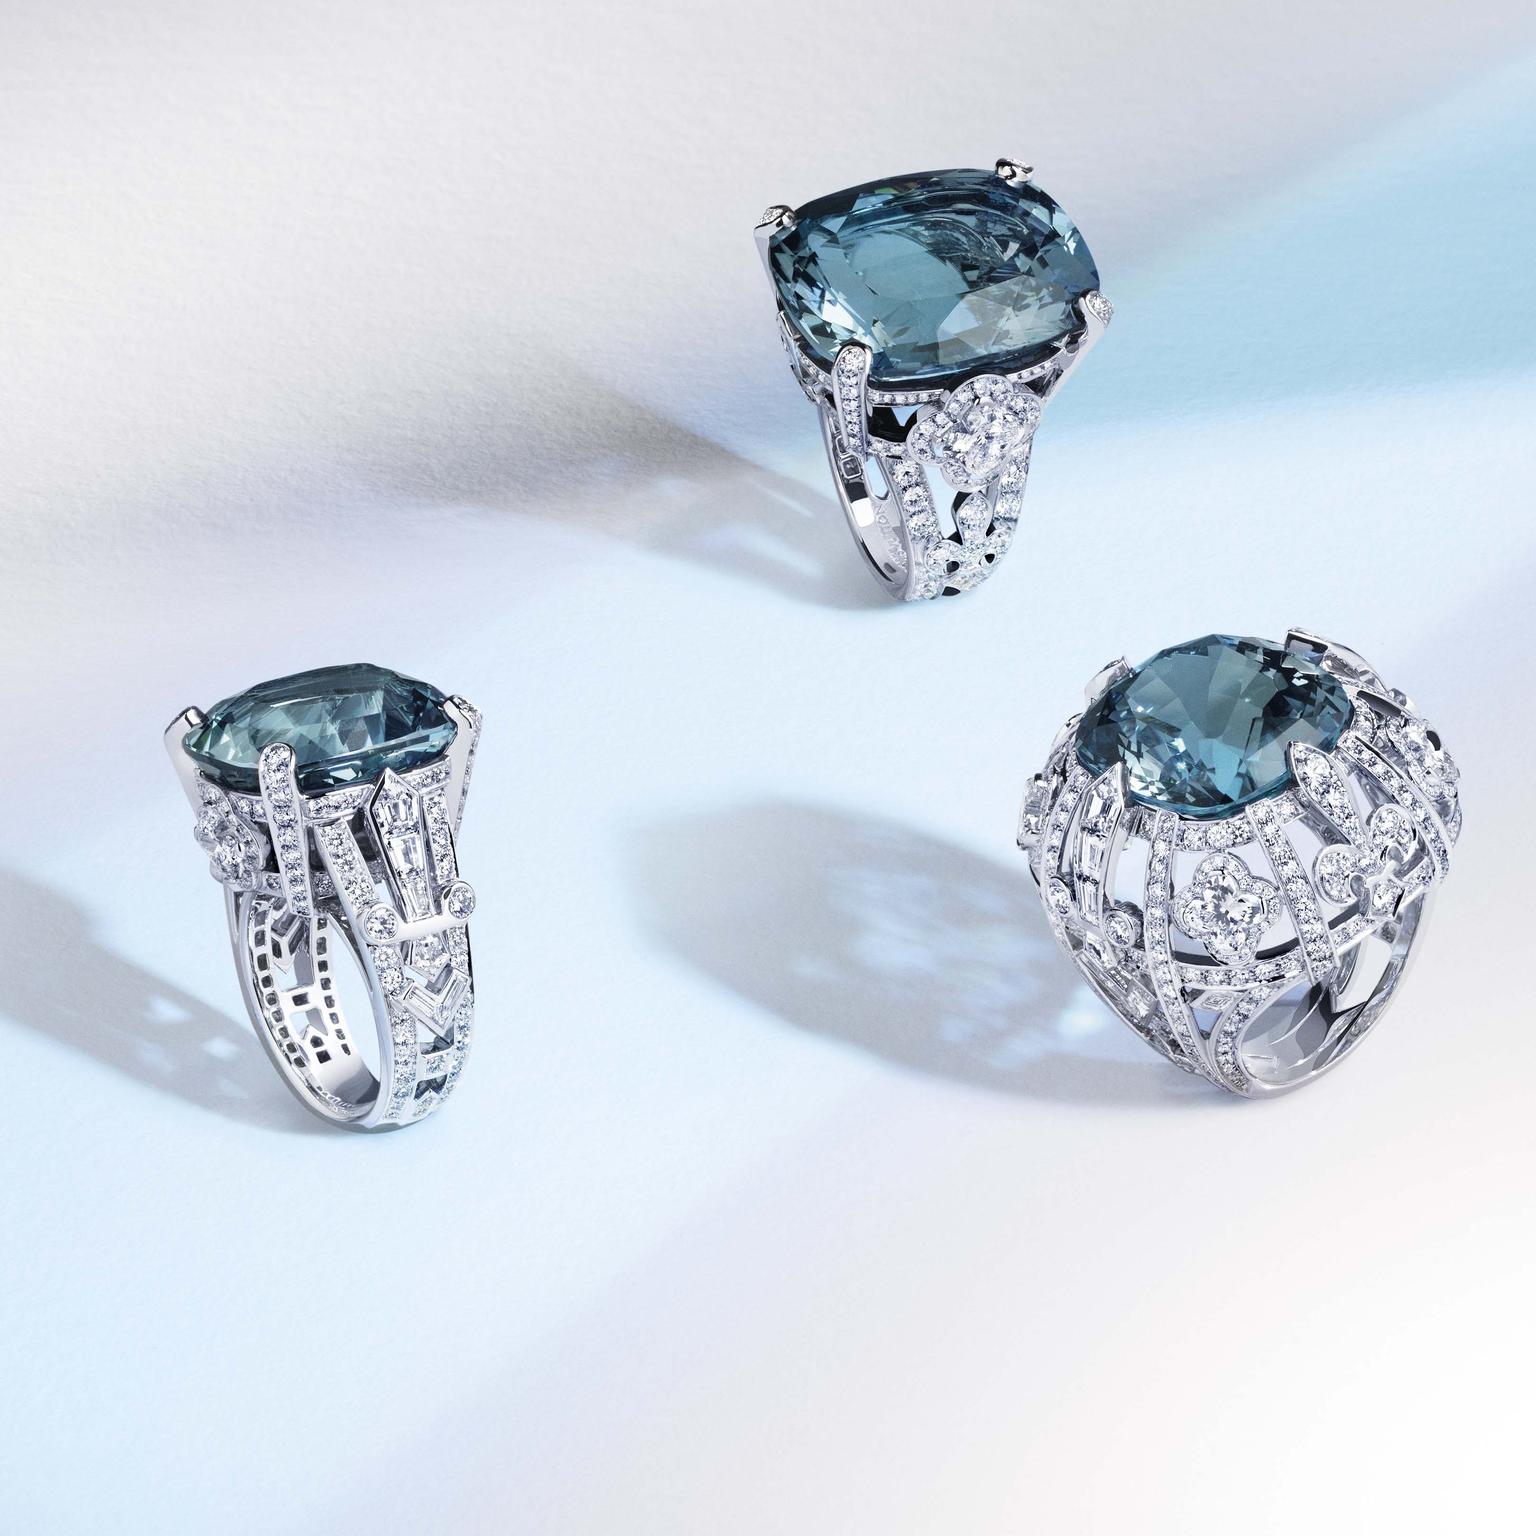 uis Vuitton Riders of the Knights La Reine diamond and aquamarine rings